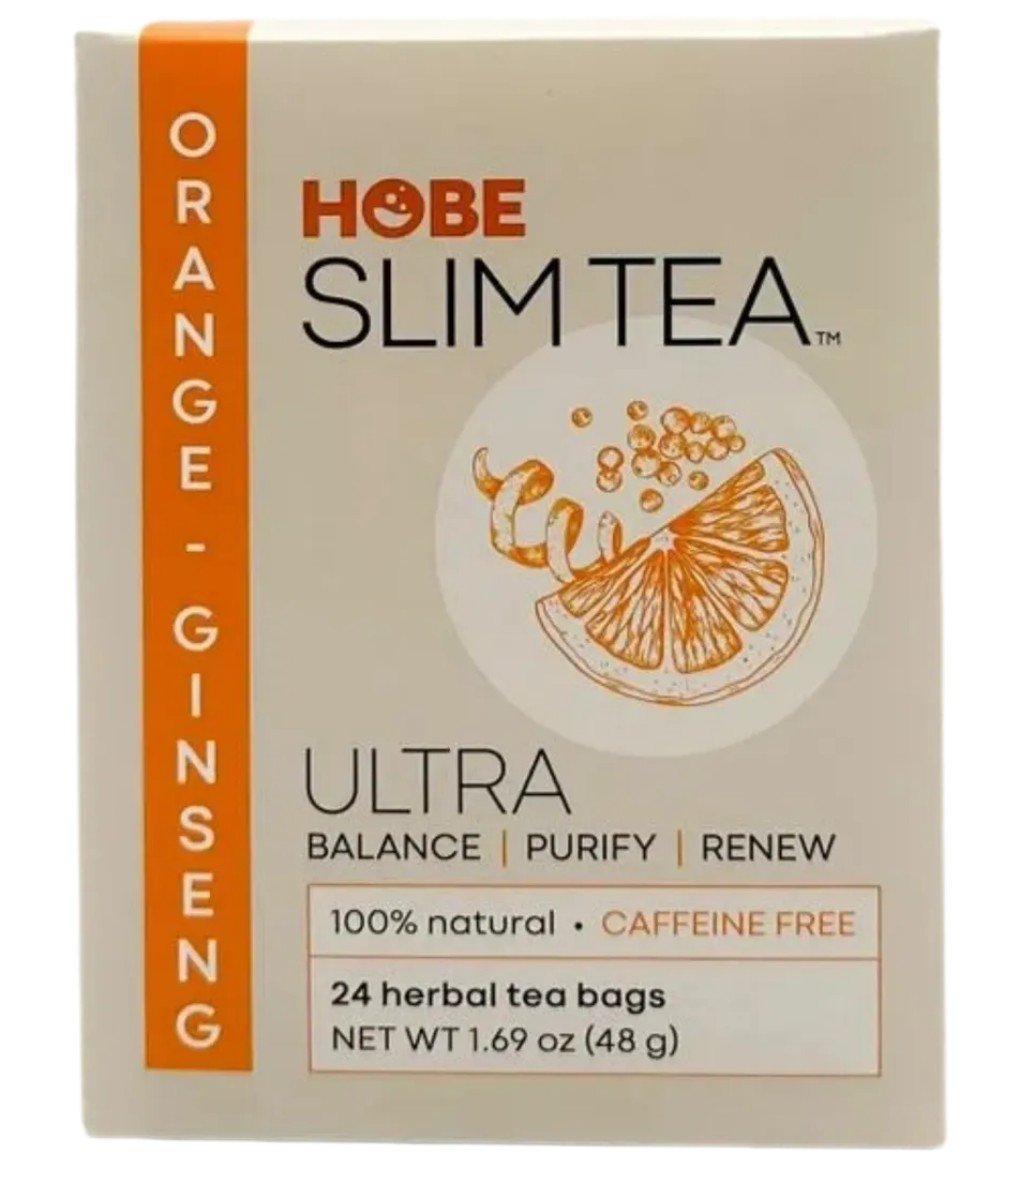 Hobe Labs UltraSlim /Orange Gionseng Tea 24 Bag